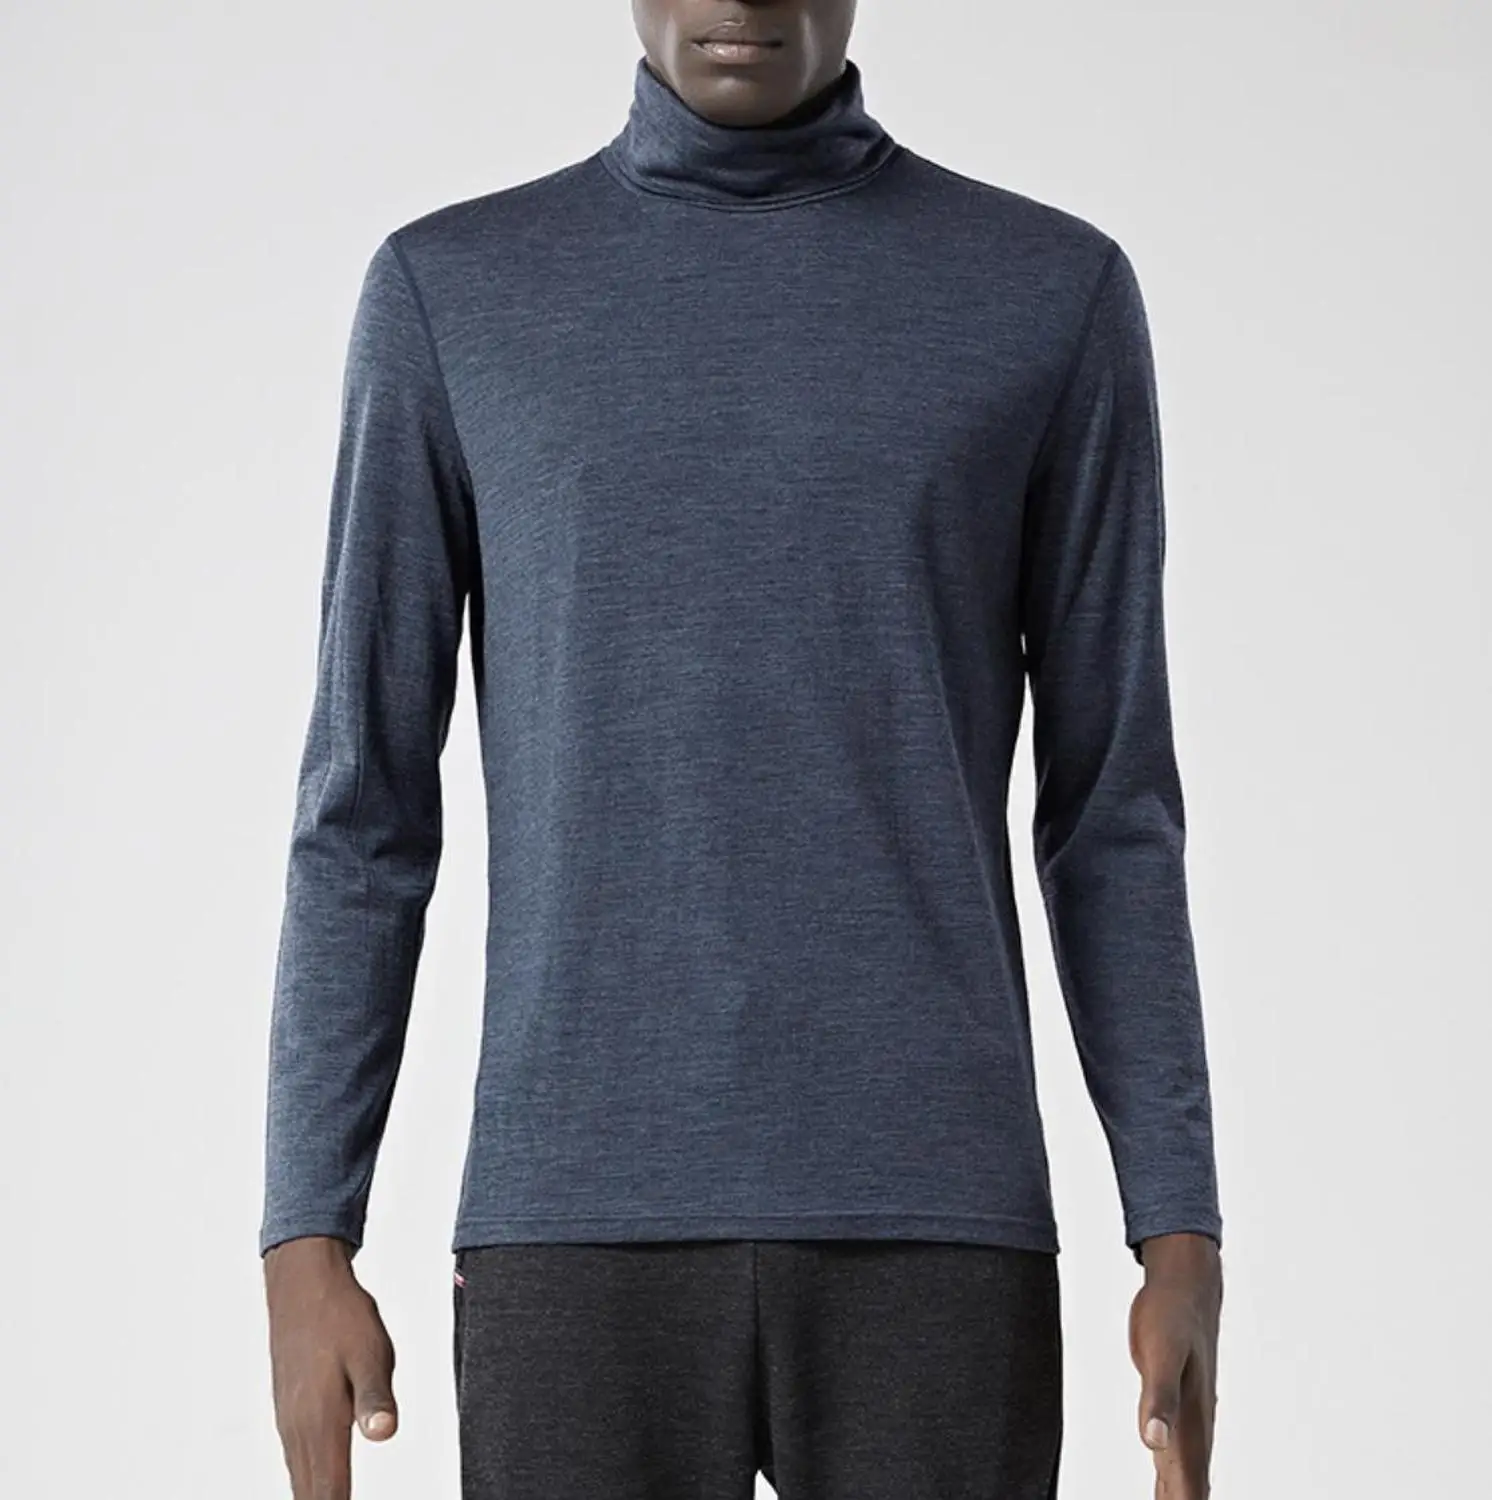 

100% Superfine Merino Wool Men's T Shirt Long Sleeve Base Layer Breathable shirt Soft Thermal Moisture Wicking